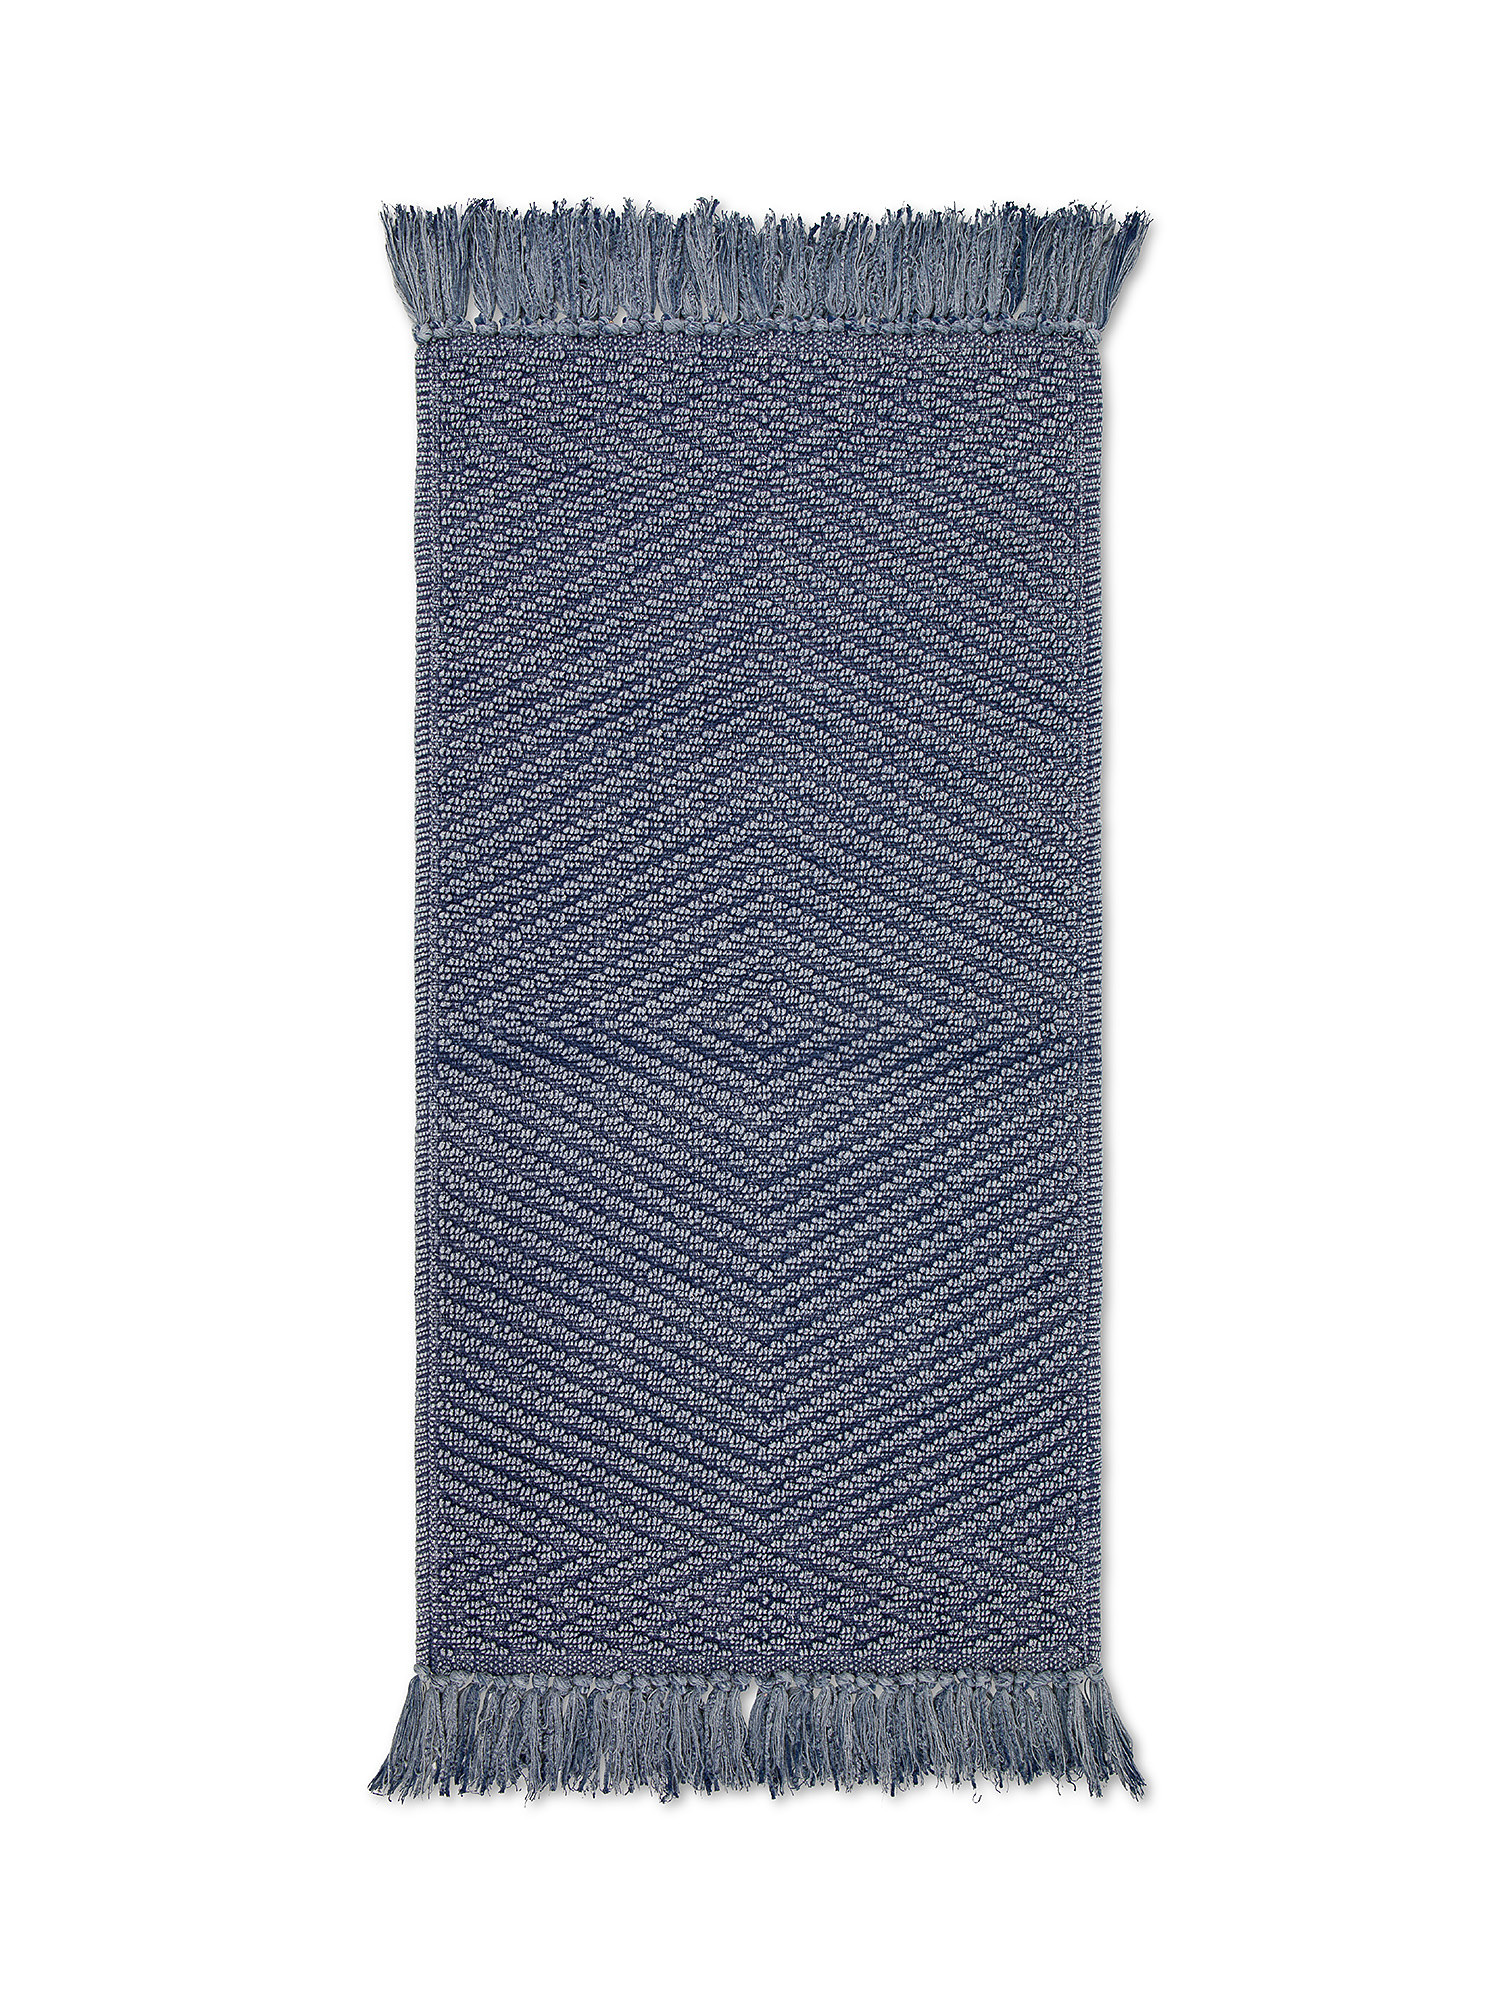 Tappeto bagno in cotone jacquard, Blu, large image number 0